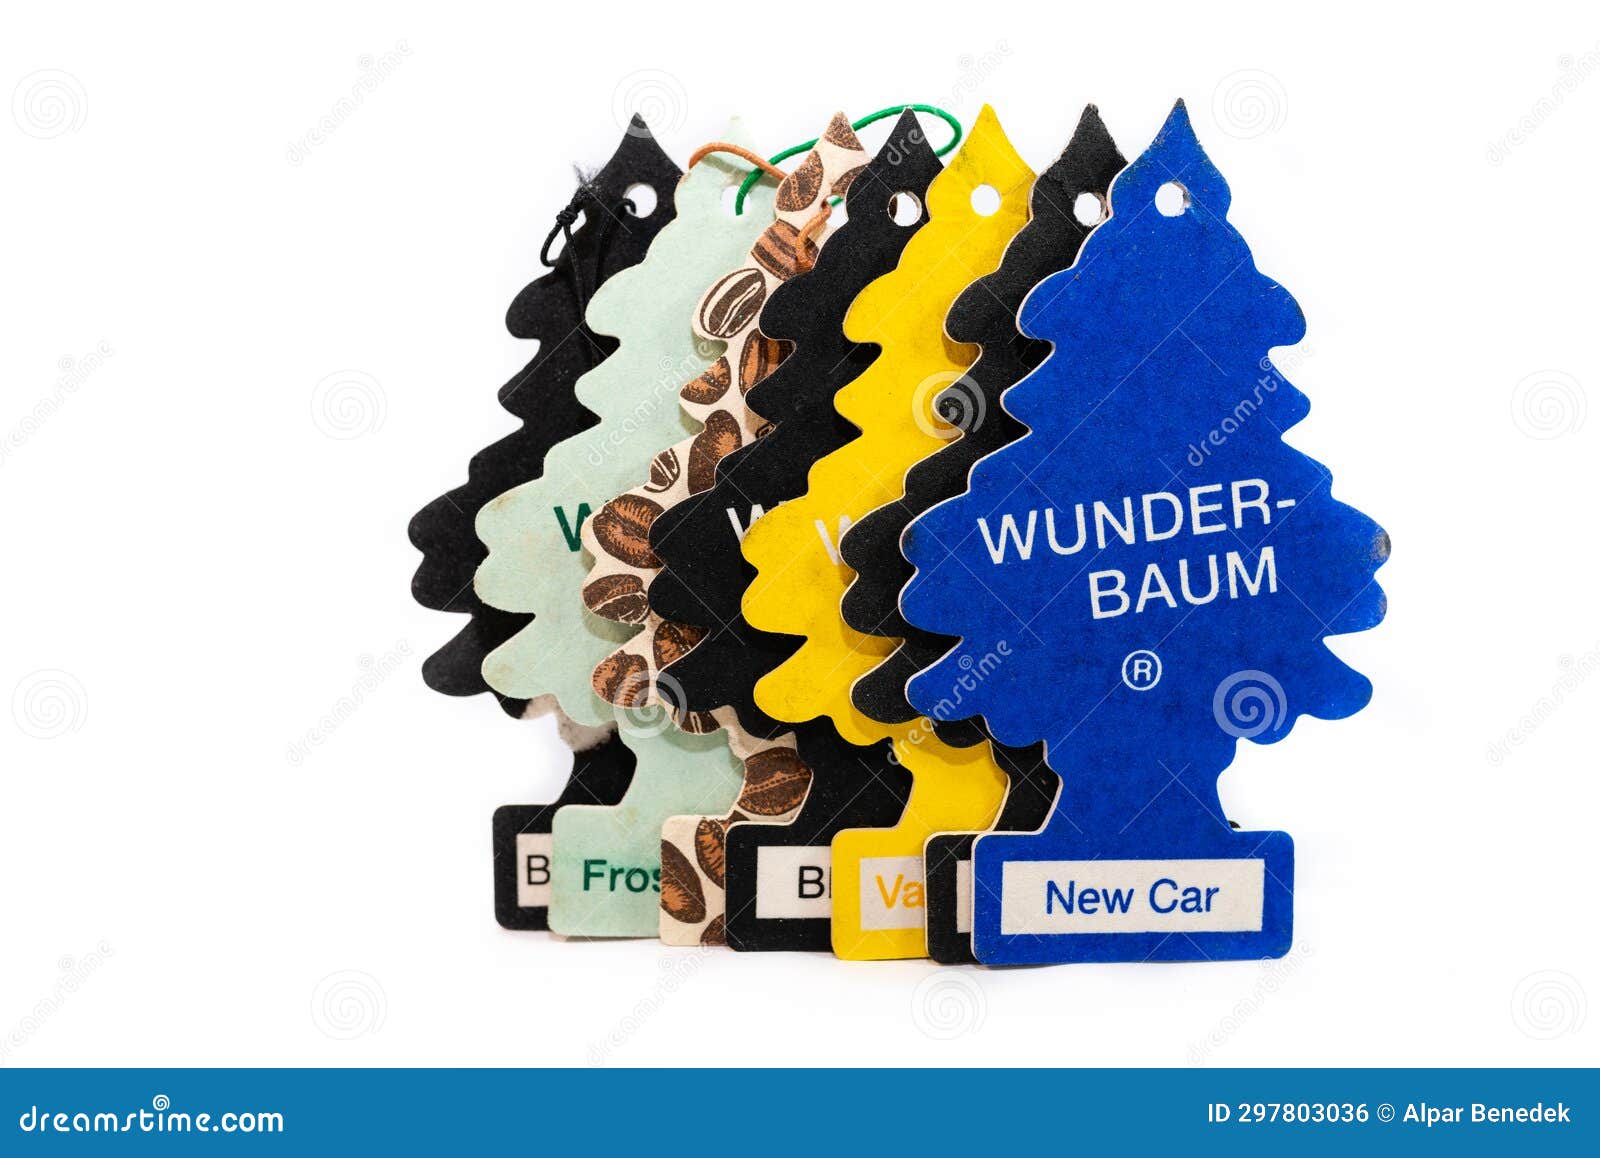 8 x WUNDER-BAUM NEW CAR BLUE - CAR AIR FRESHENER - HANGING LITTLE TREE  REFRESH 